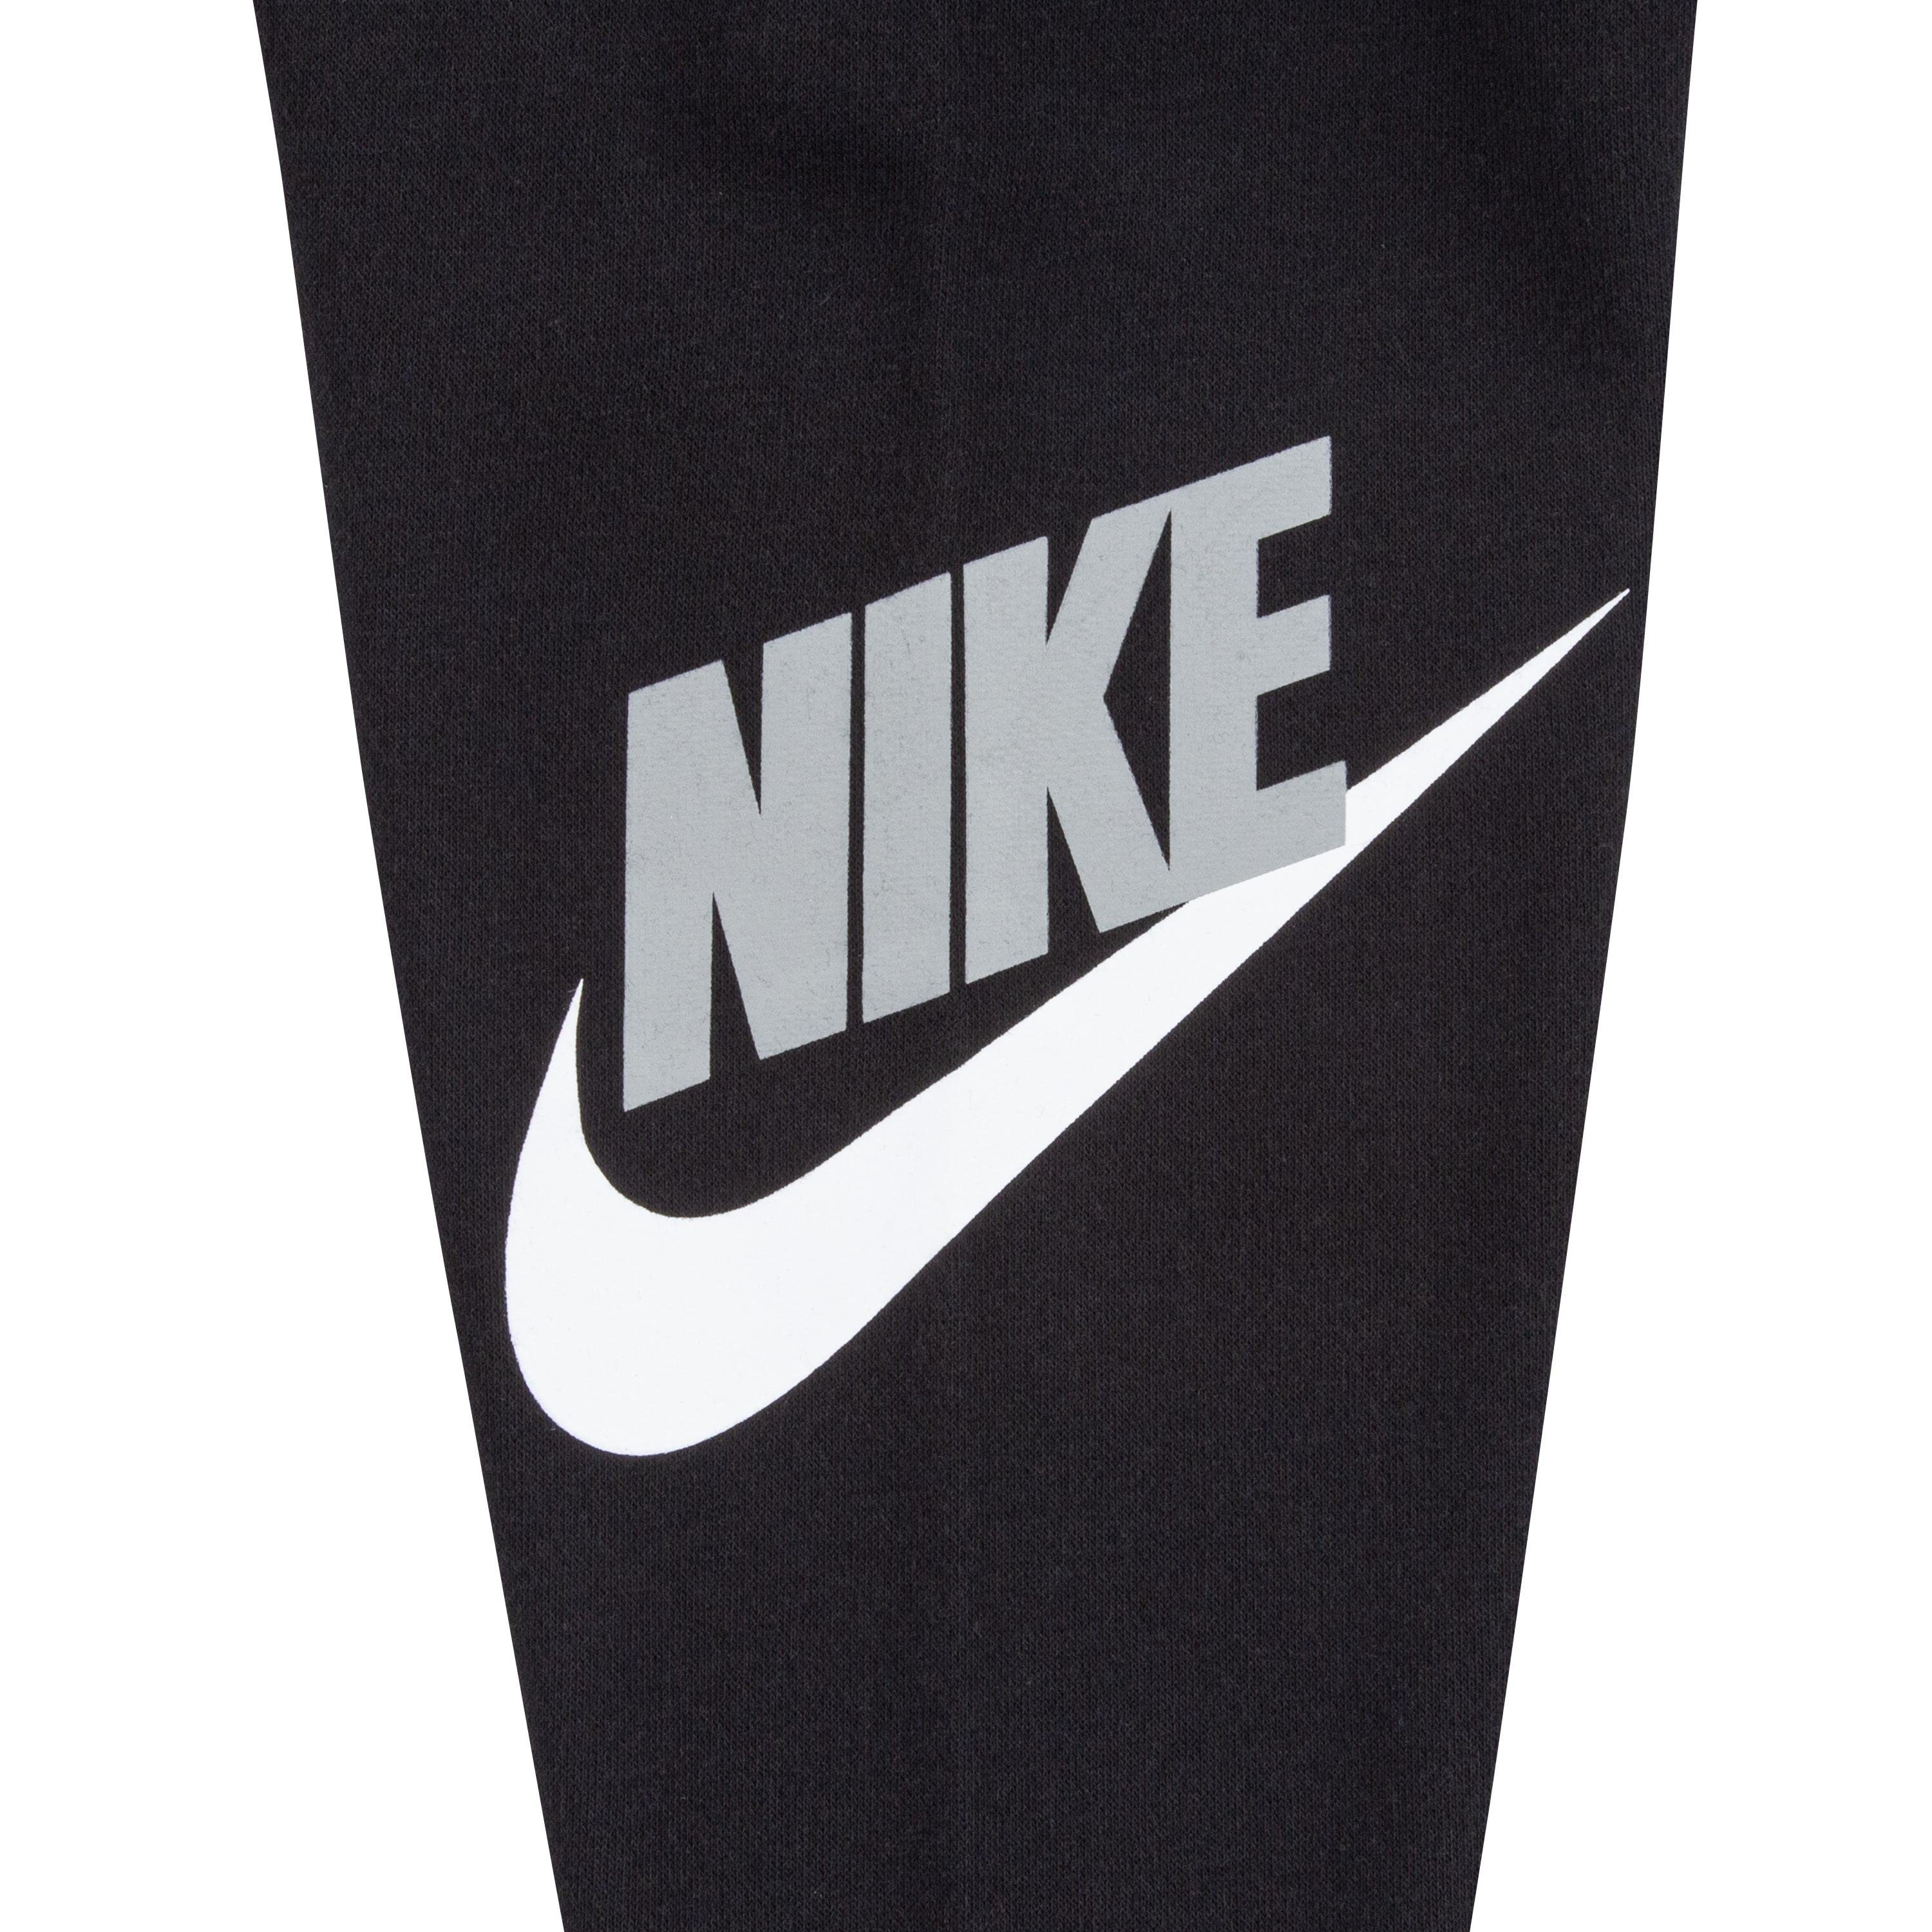 Nike Sportswear 2PC schwarz SET Jogginganzug FLEECE 2-tlg) & (Set, PO HOODIE JOGGER